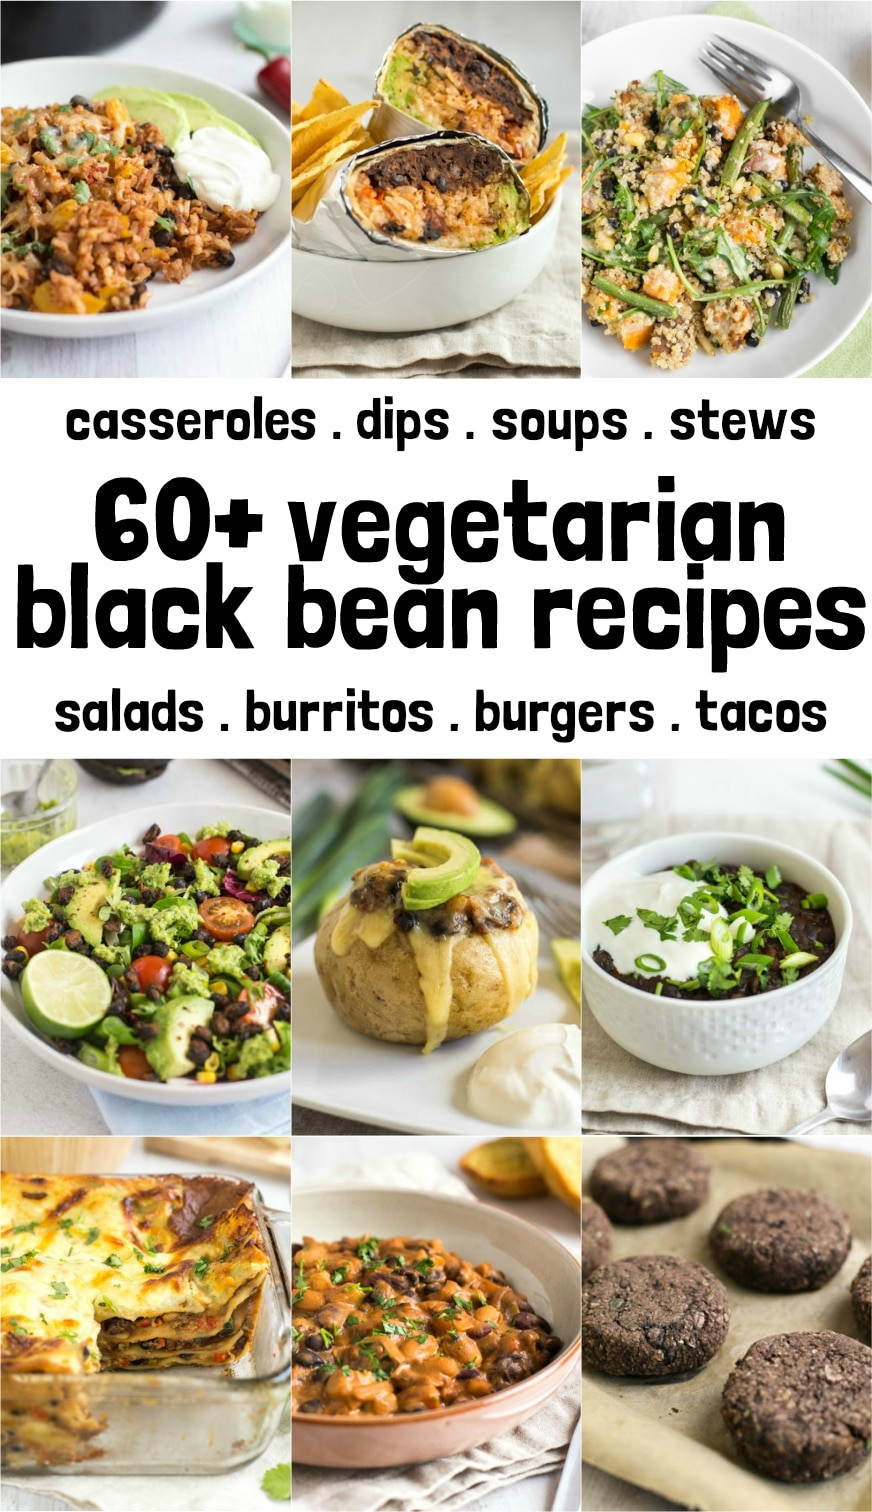 Vegetarian Black Bean Recipes
 60 ve arian black bean recipes Amuse Your Bouche